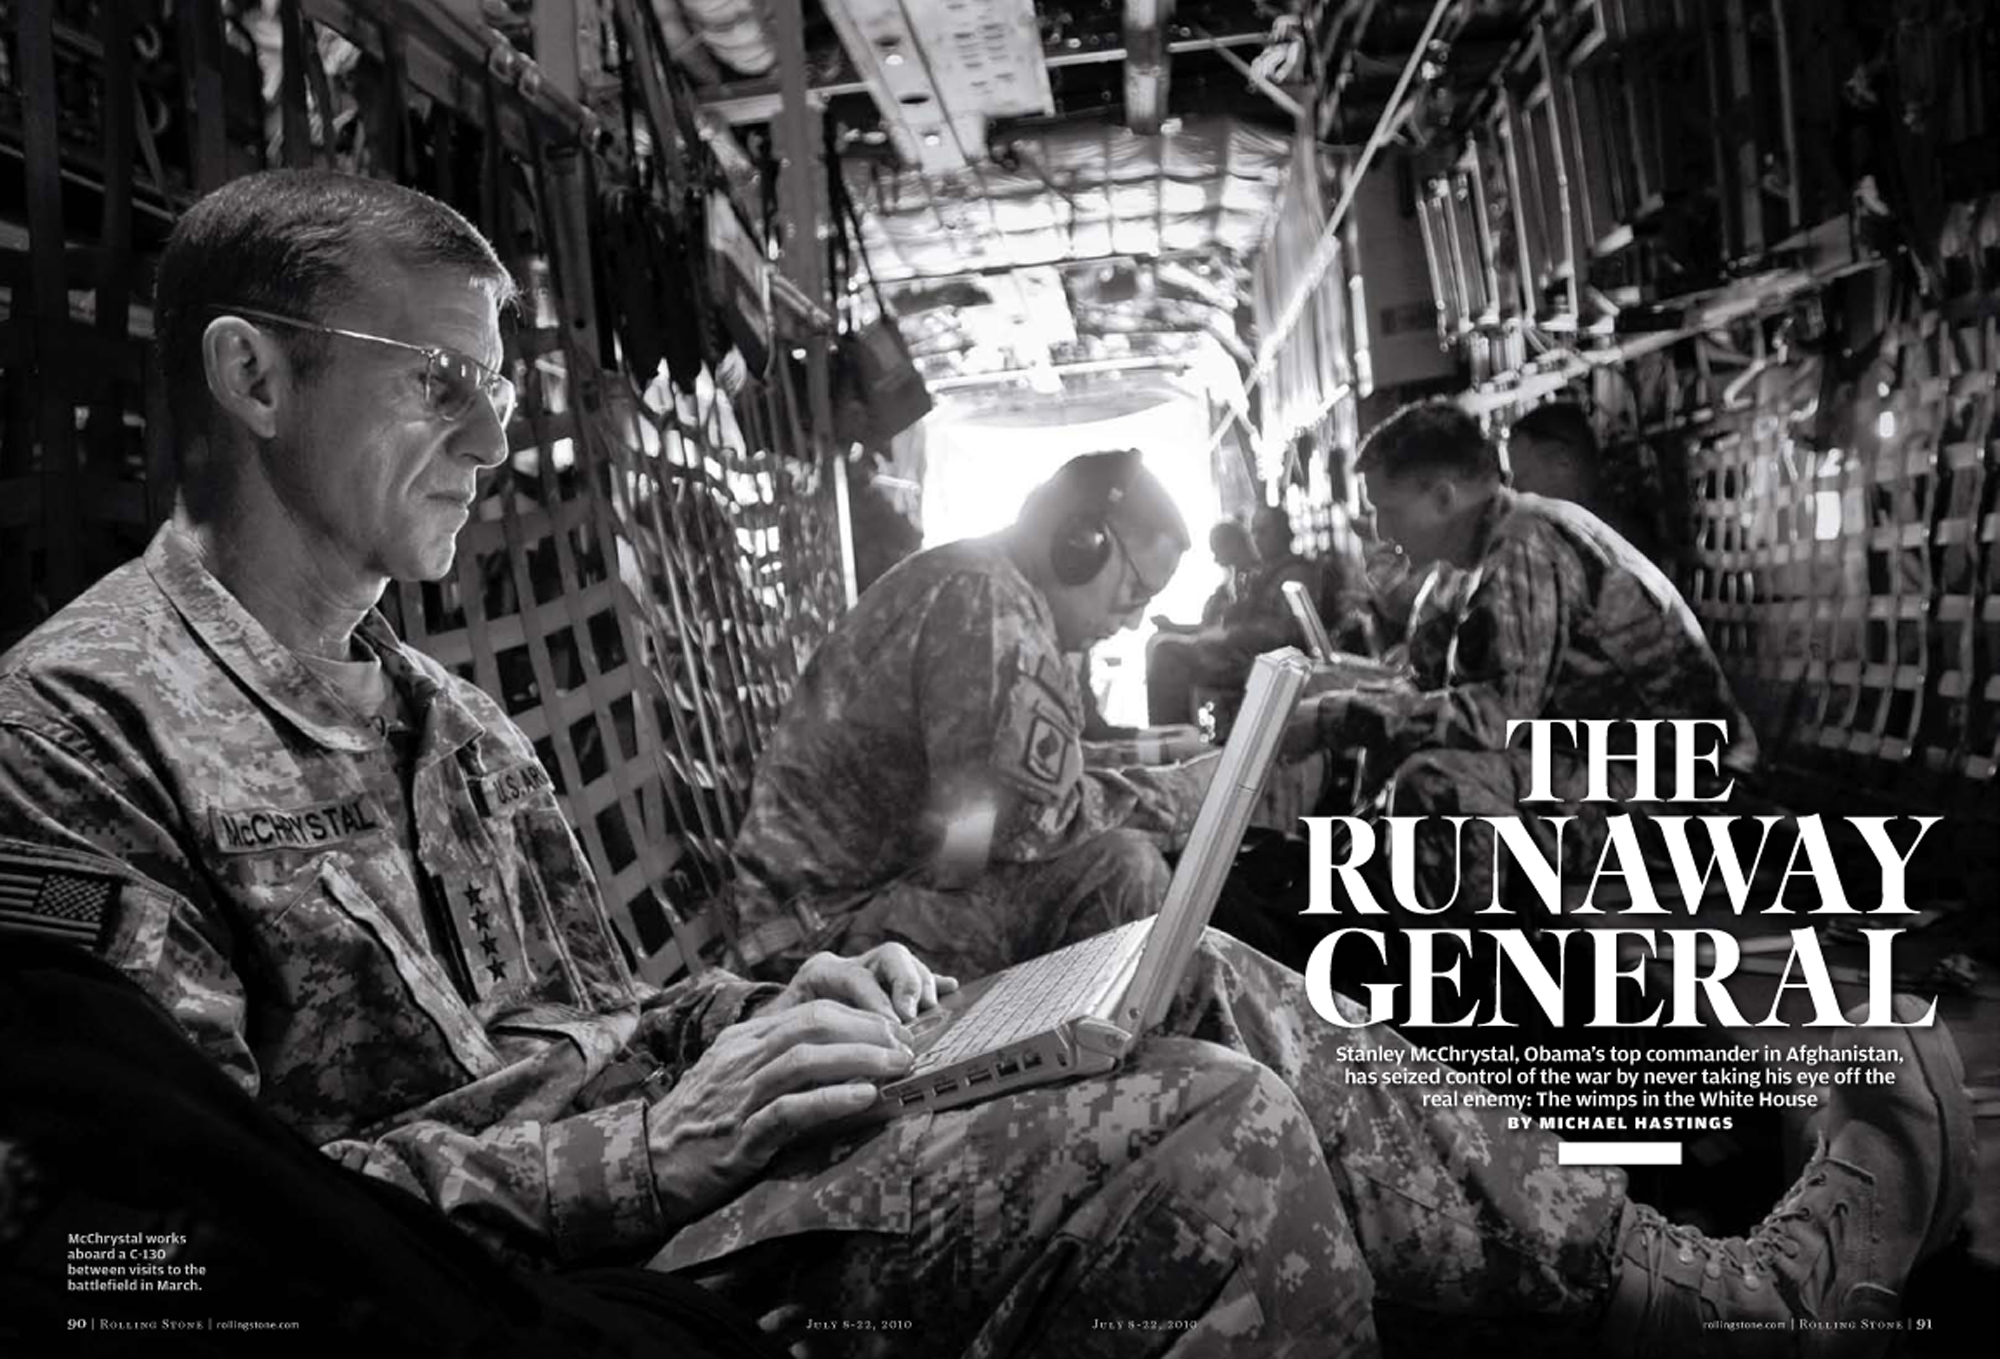 Afghanistan, Stanley McChrystal, Barack Obama, Rolling Stone